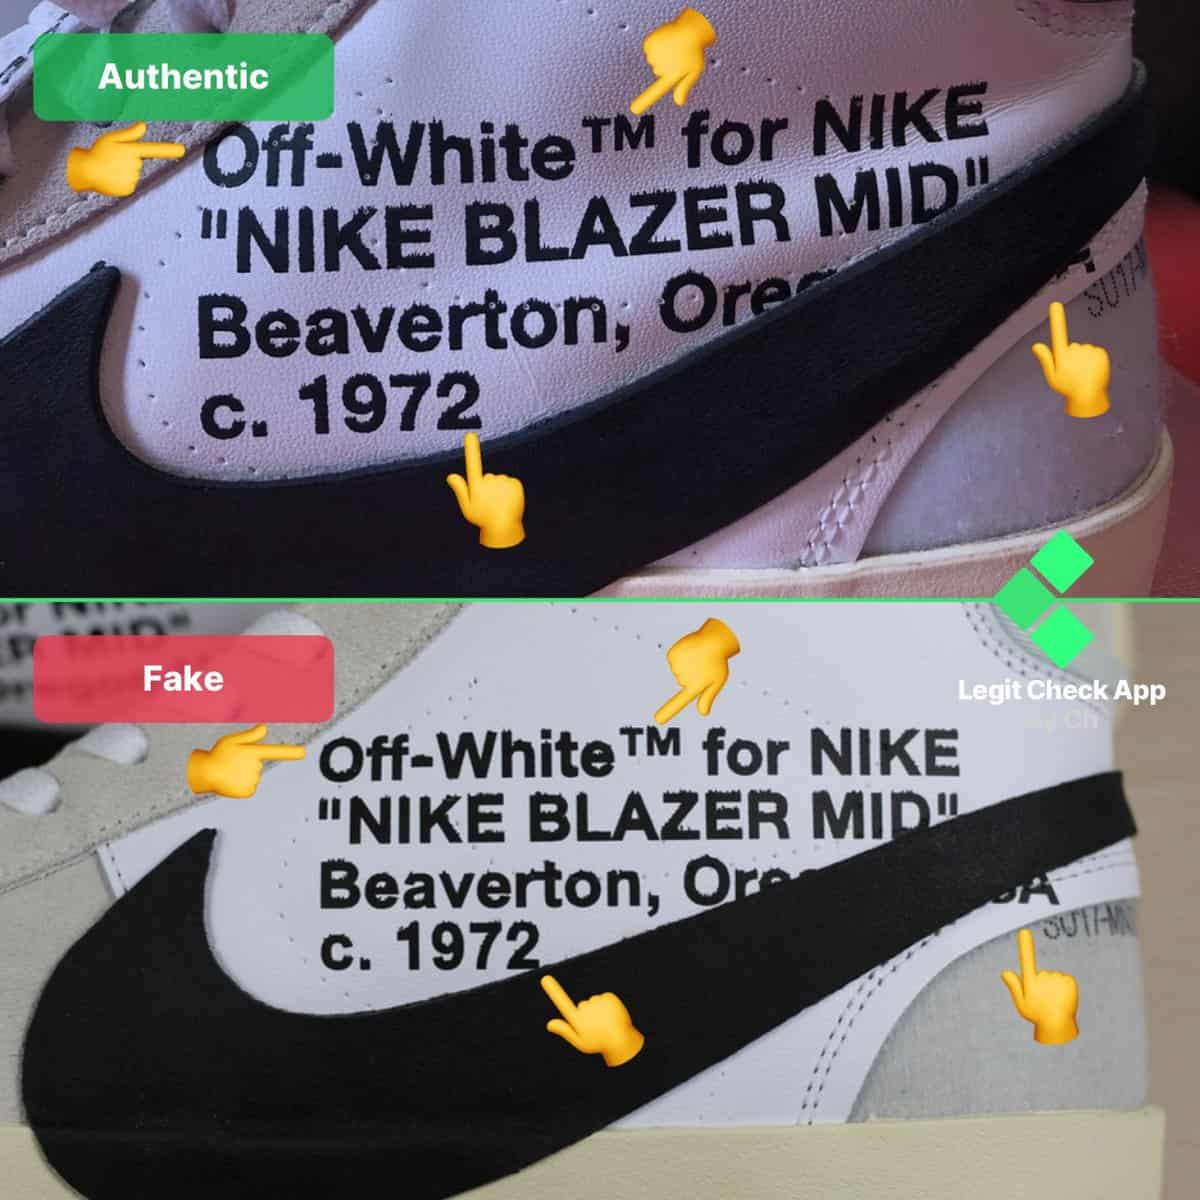 How To Spot Fake Nike Blazer Off-White (2024) - Legit Check By Ch